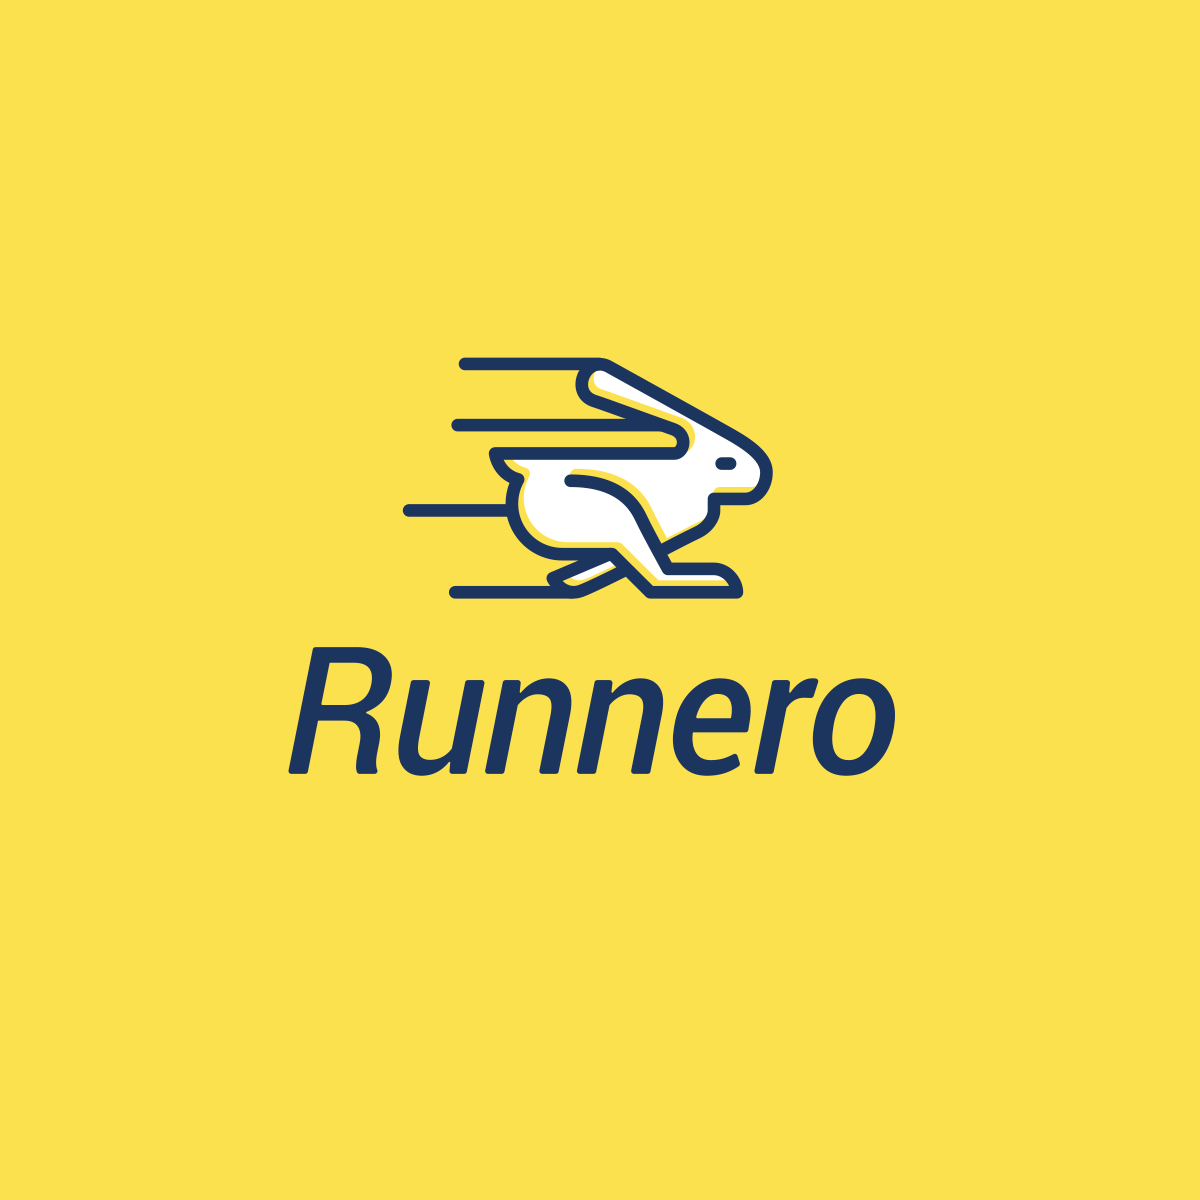 Rabbit Logo - For Sale: Runnero Rabbit logo design